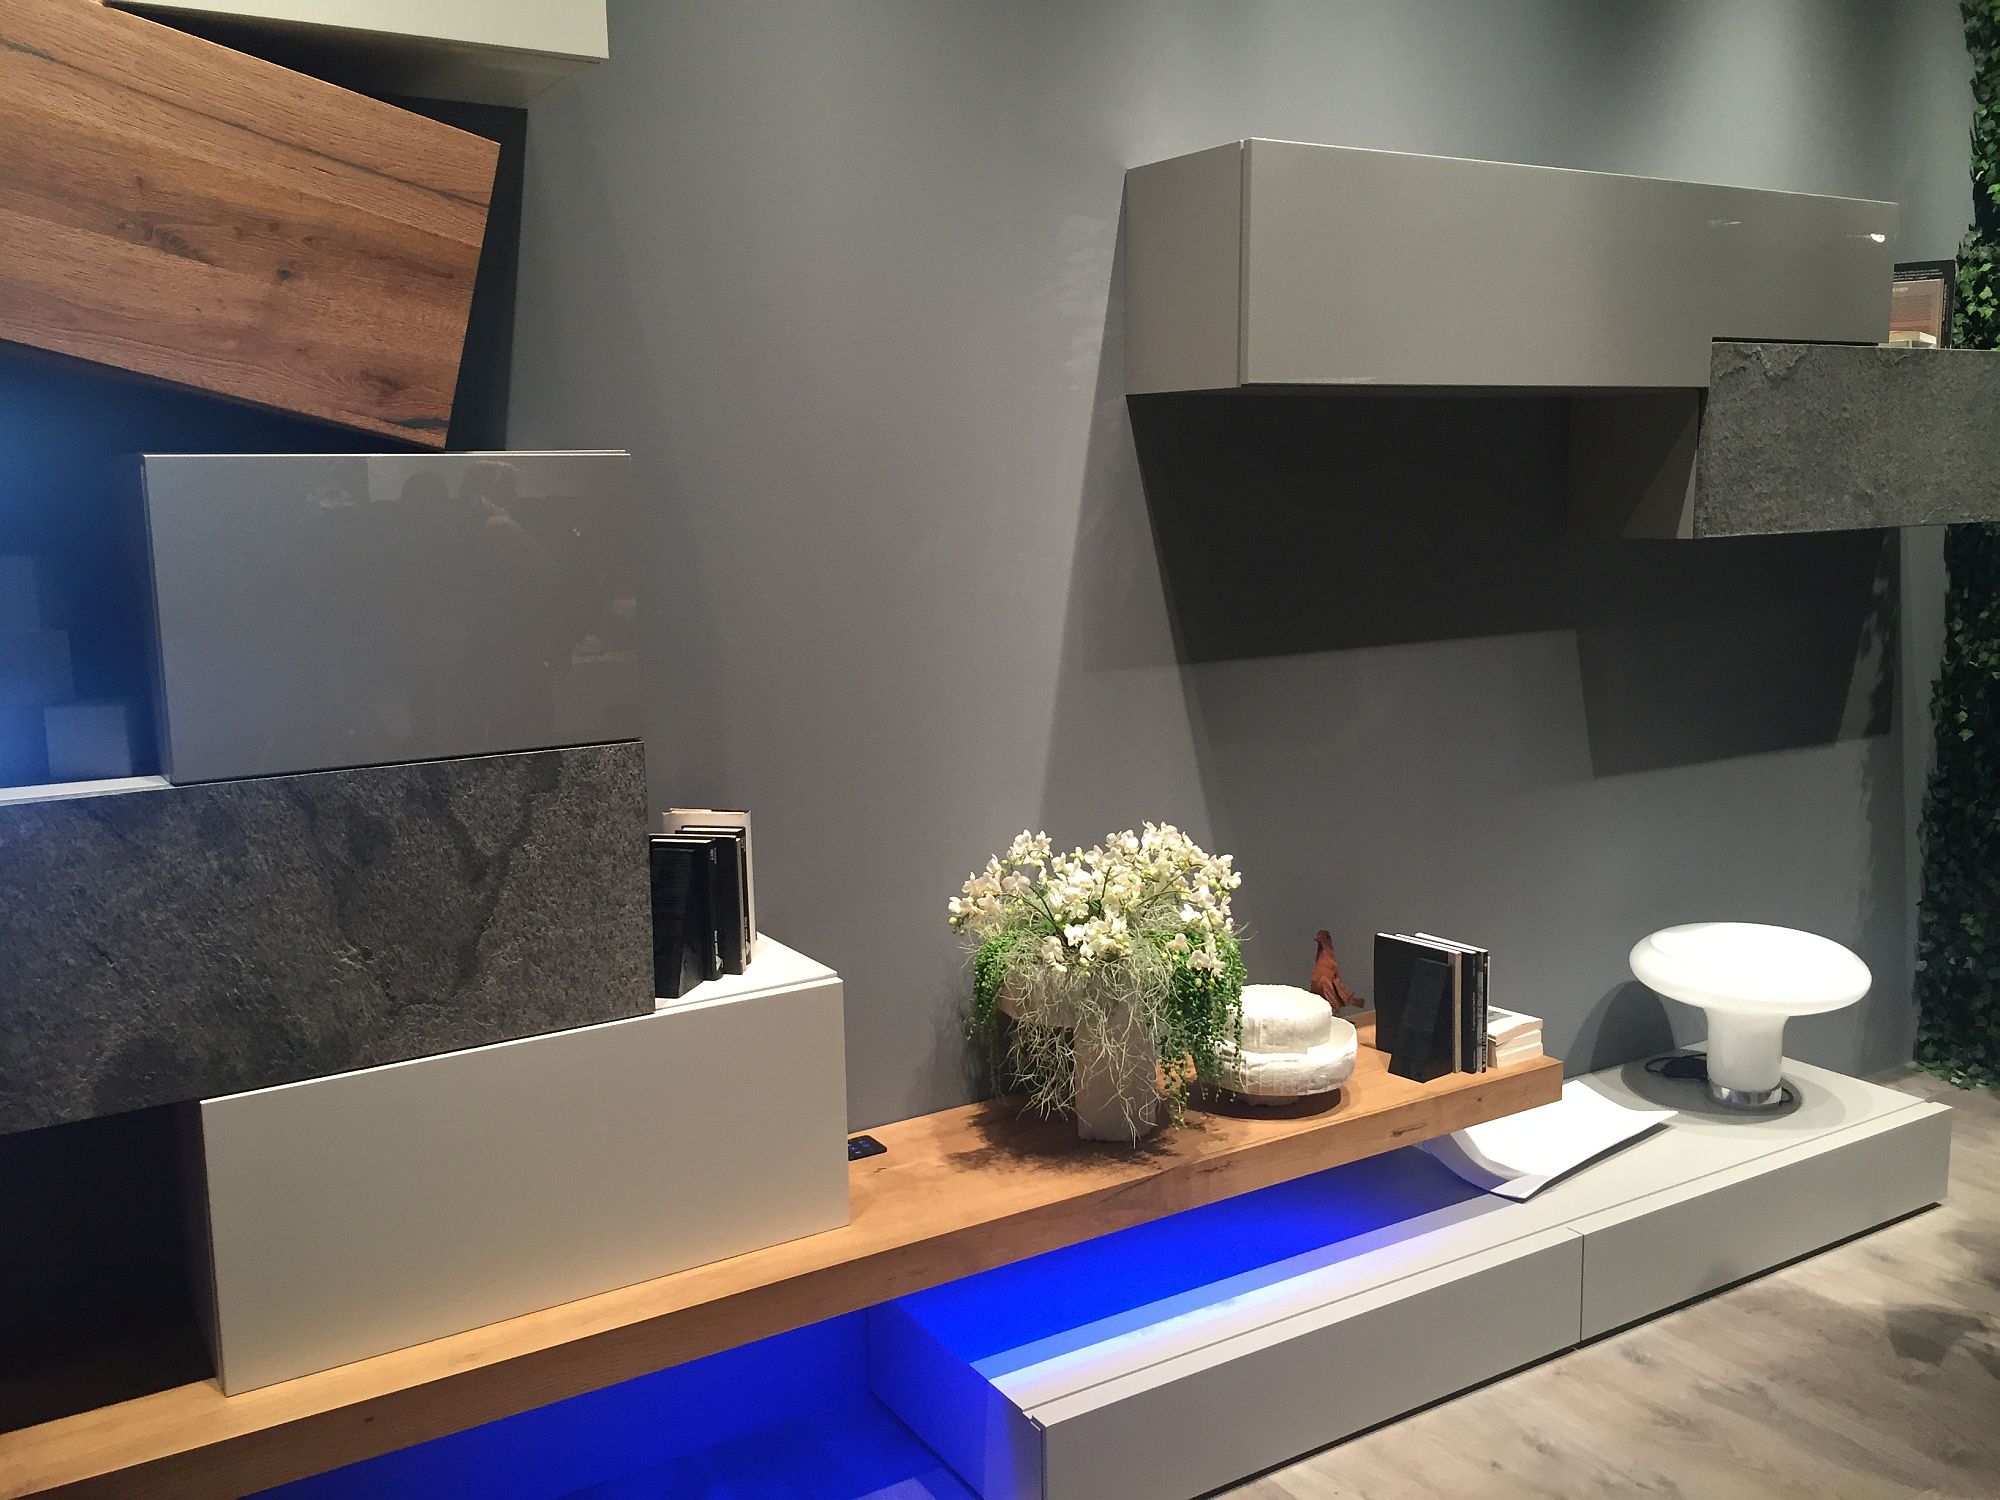 Modular-living-room-wall-units-create-a-sense-of-abstract-minimalism